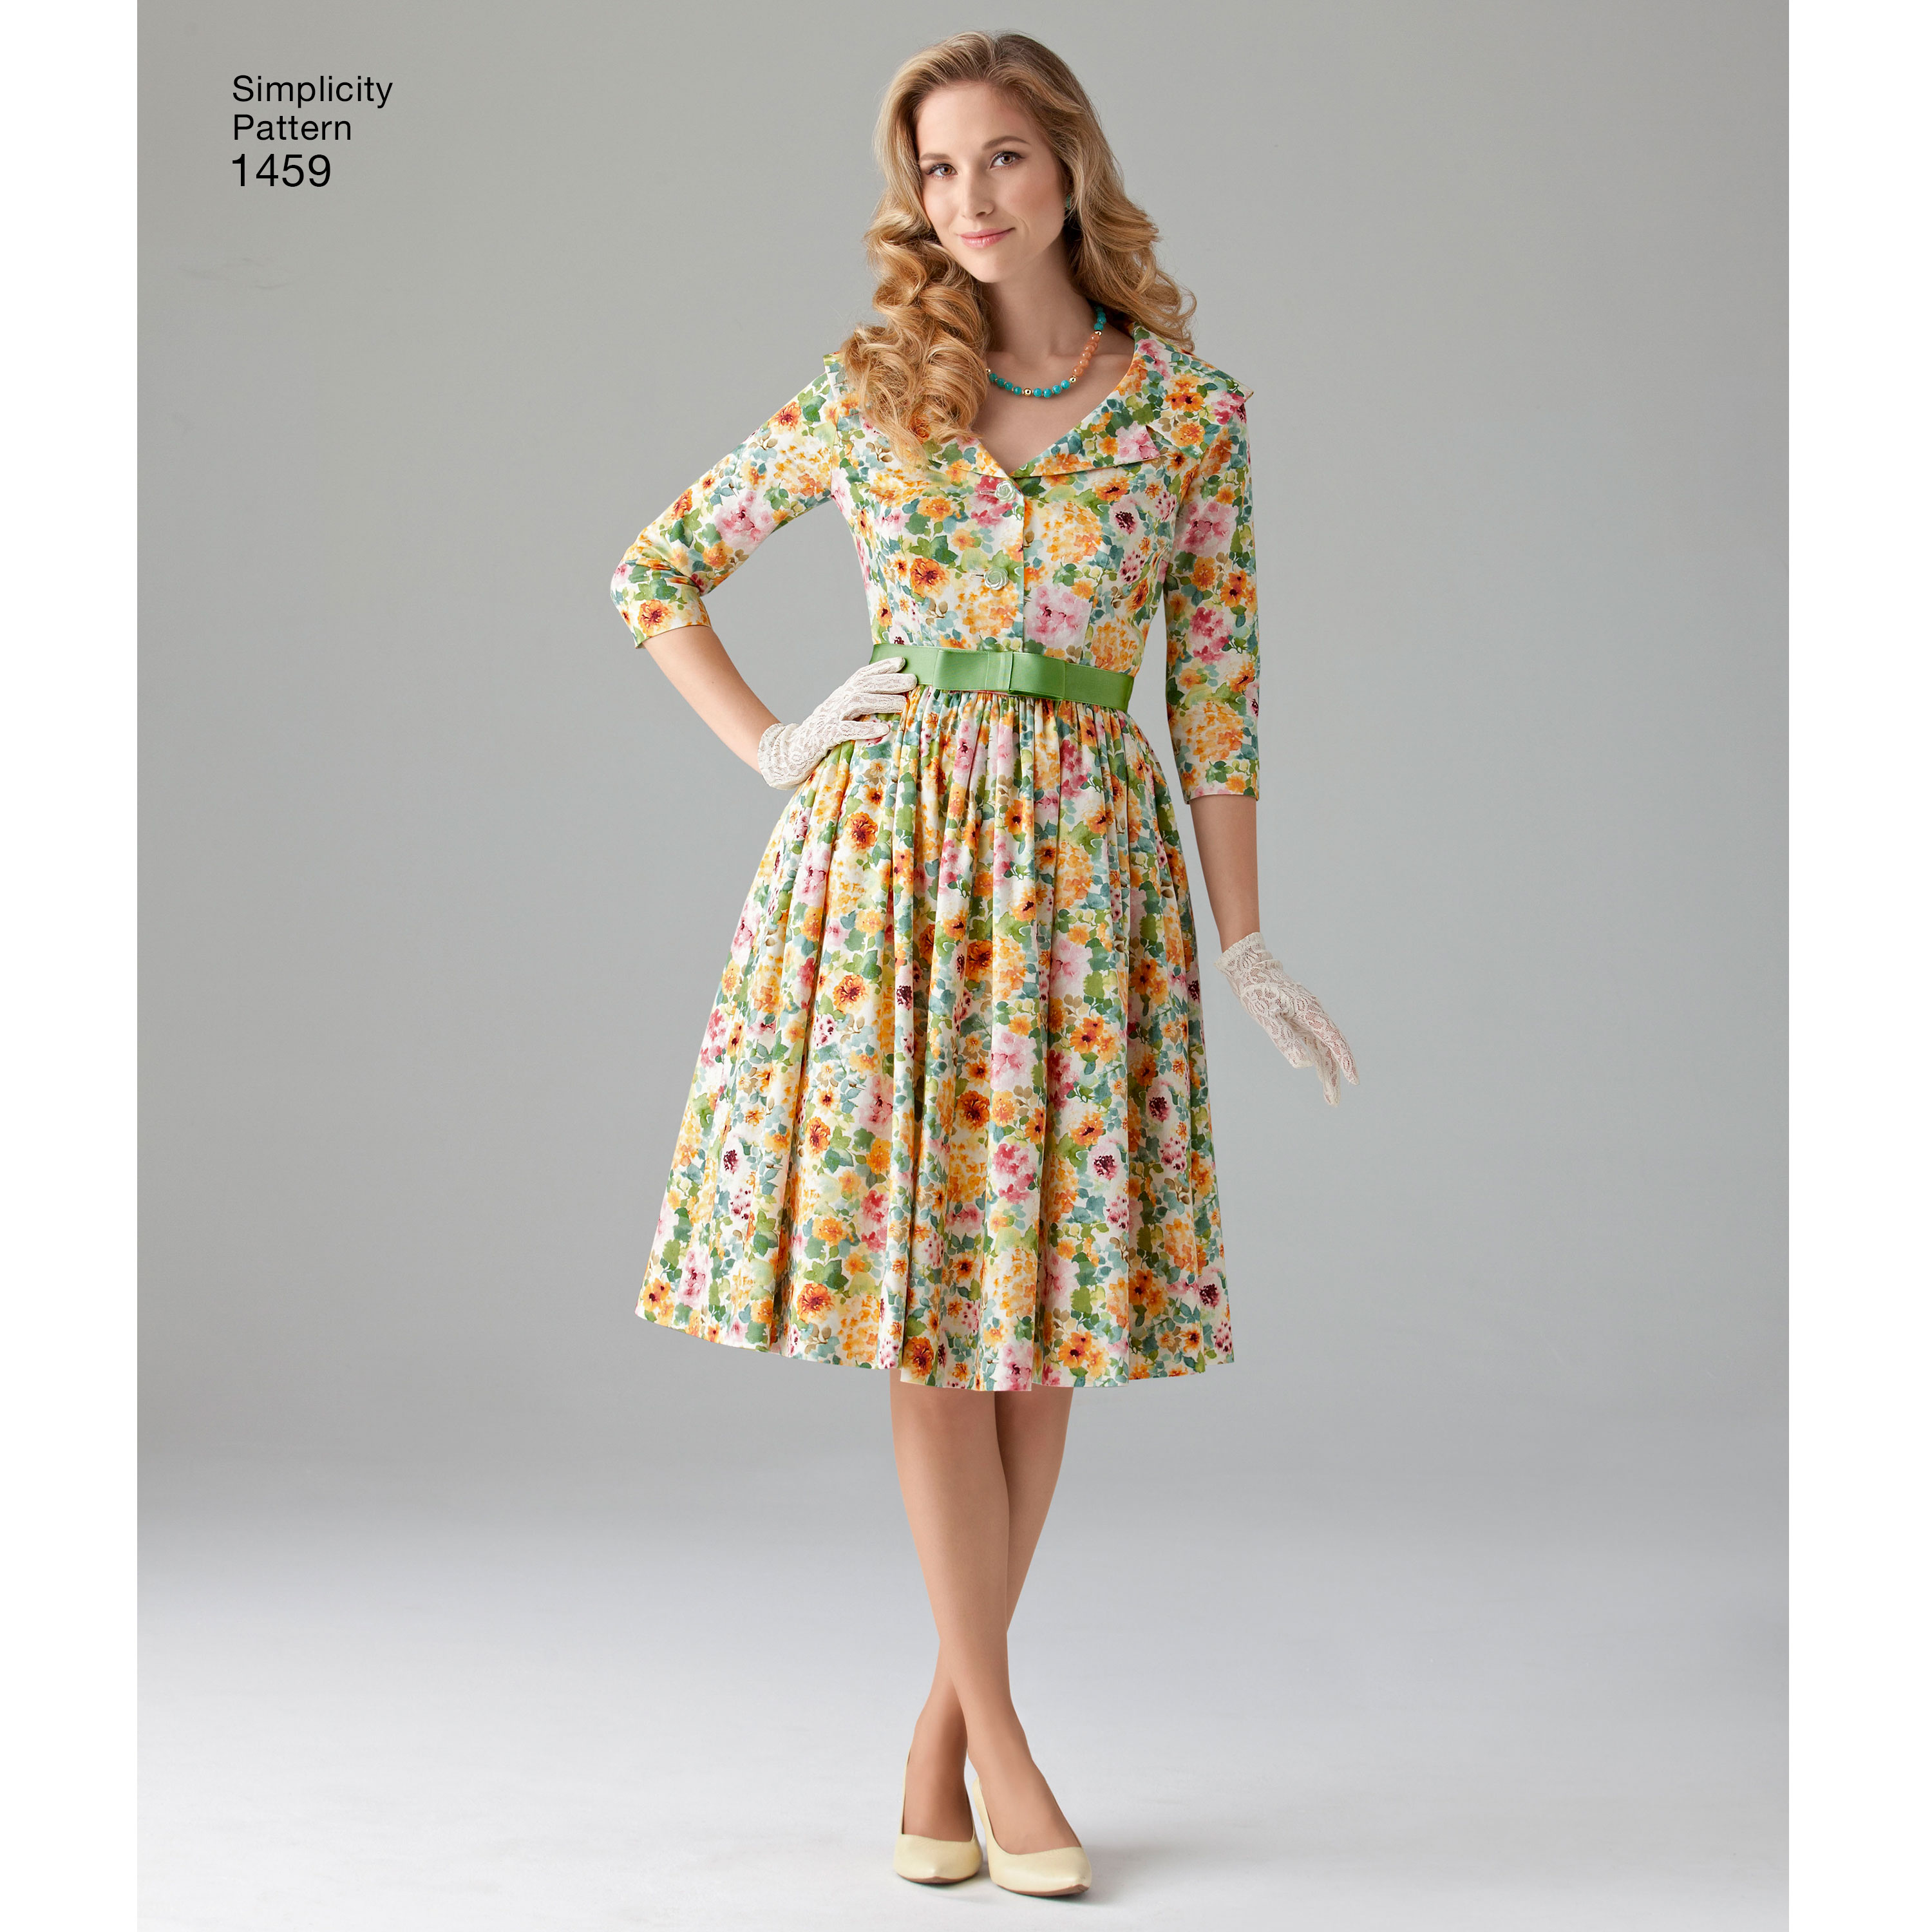 SIMPLICITY PATTERNS – The Dressmaker Fabrics